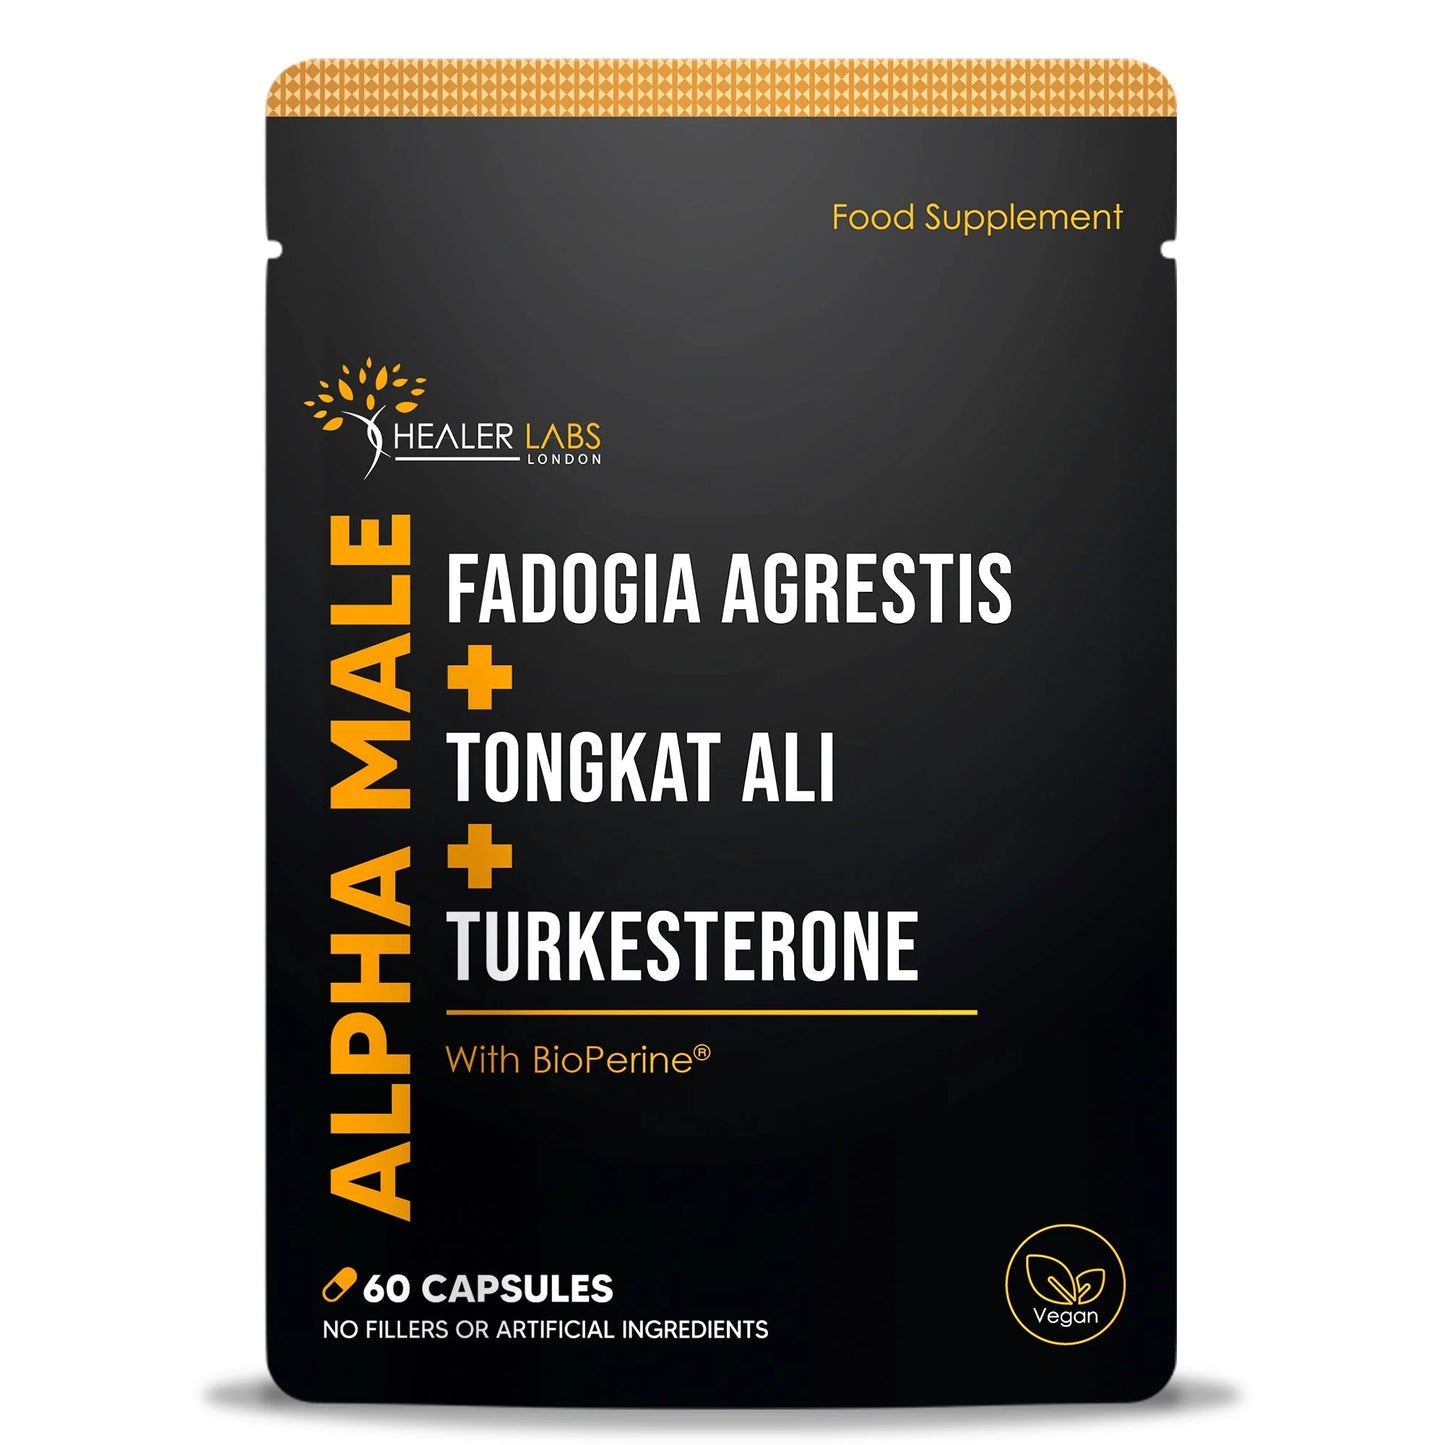 Fadogia Agrestis 20:1 TongkatAli 200:1  Turkesterone 10%